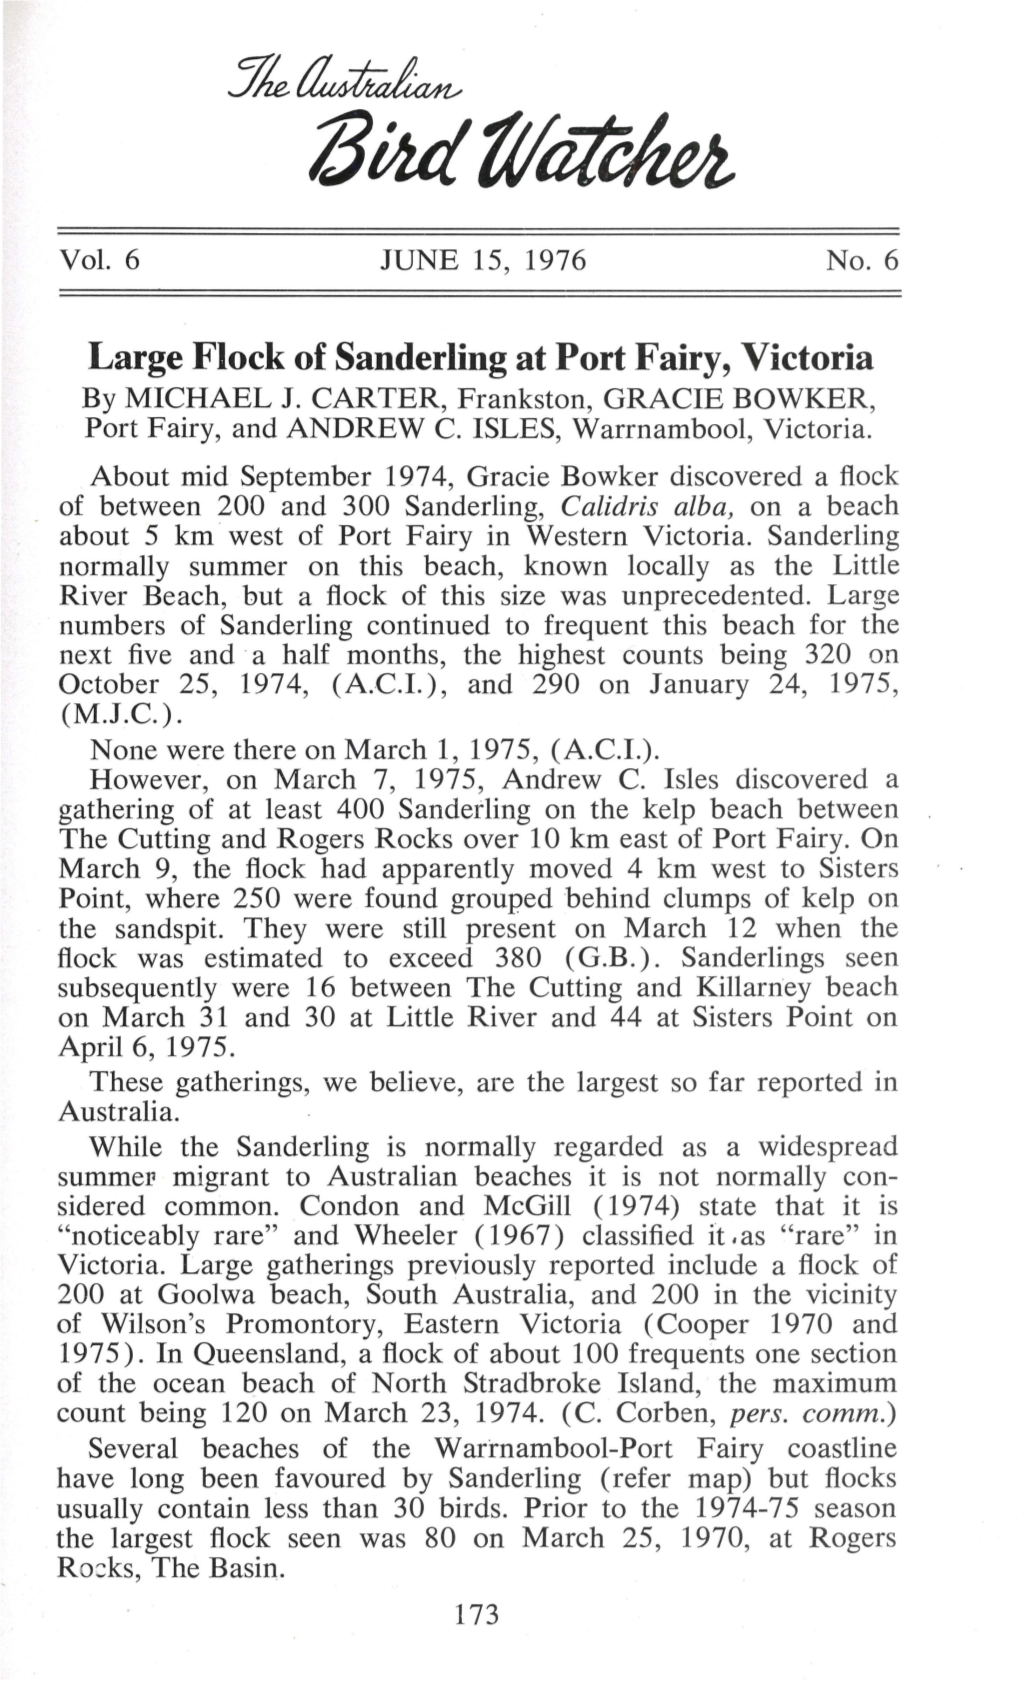 Large Flock of Sanderling at Port Fairy, Victoria by MICHAEL J